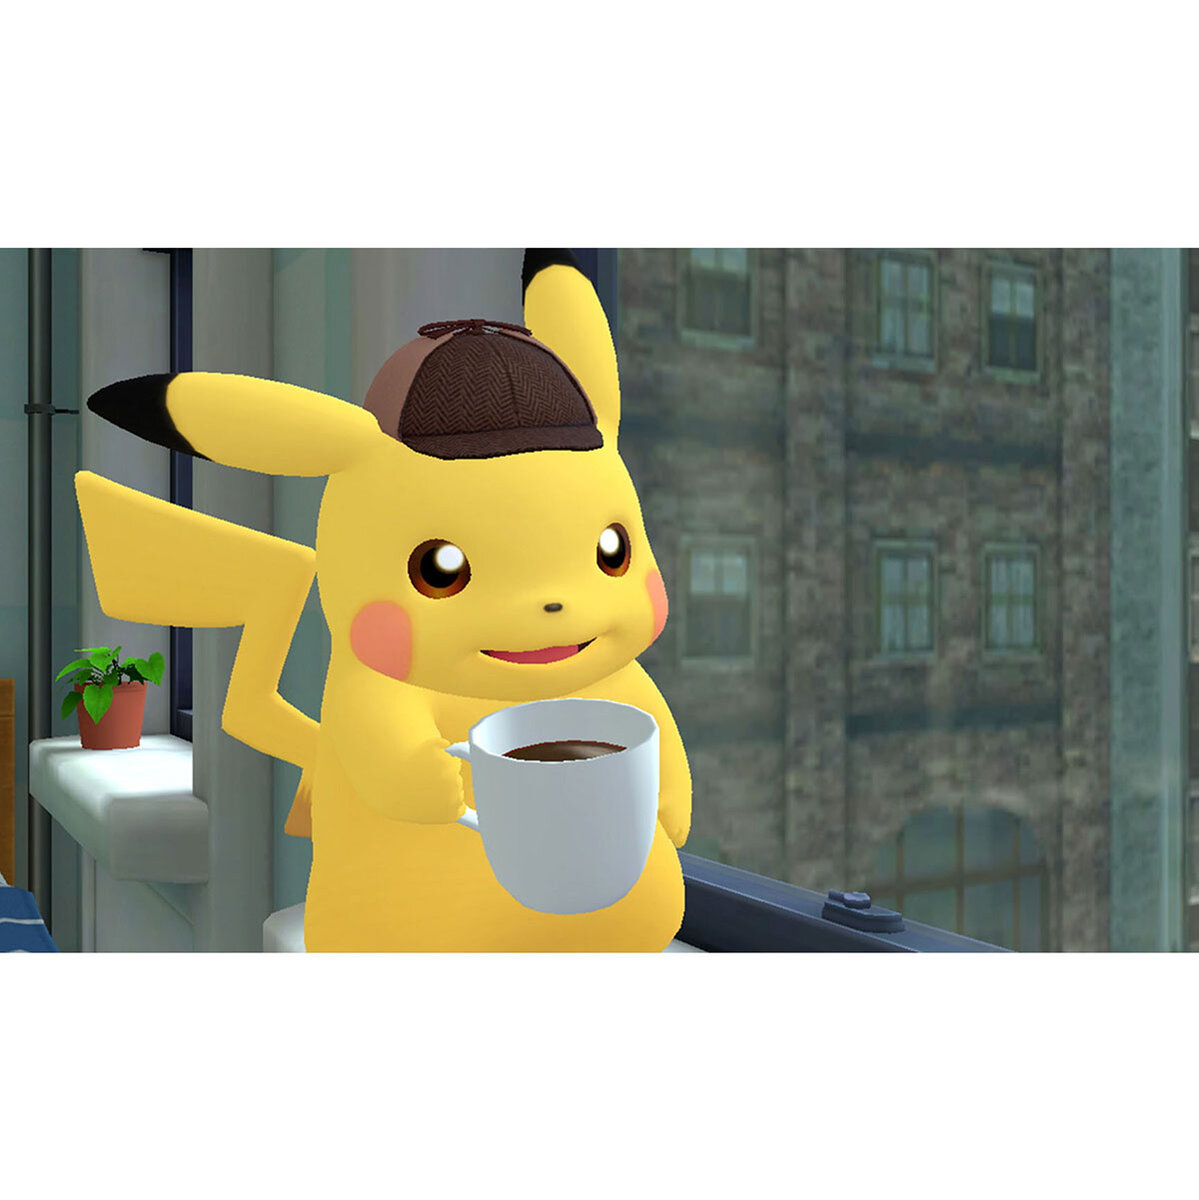 Nintendo Switch - Detective Pikachu Returns